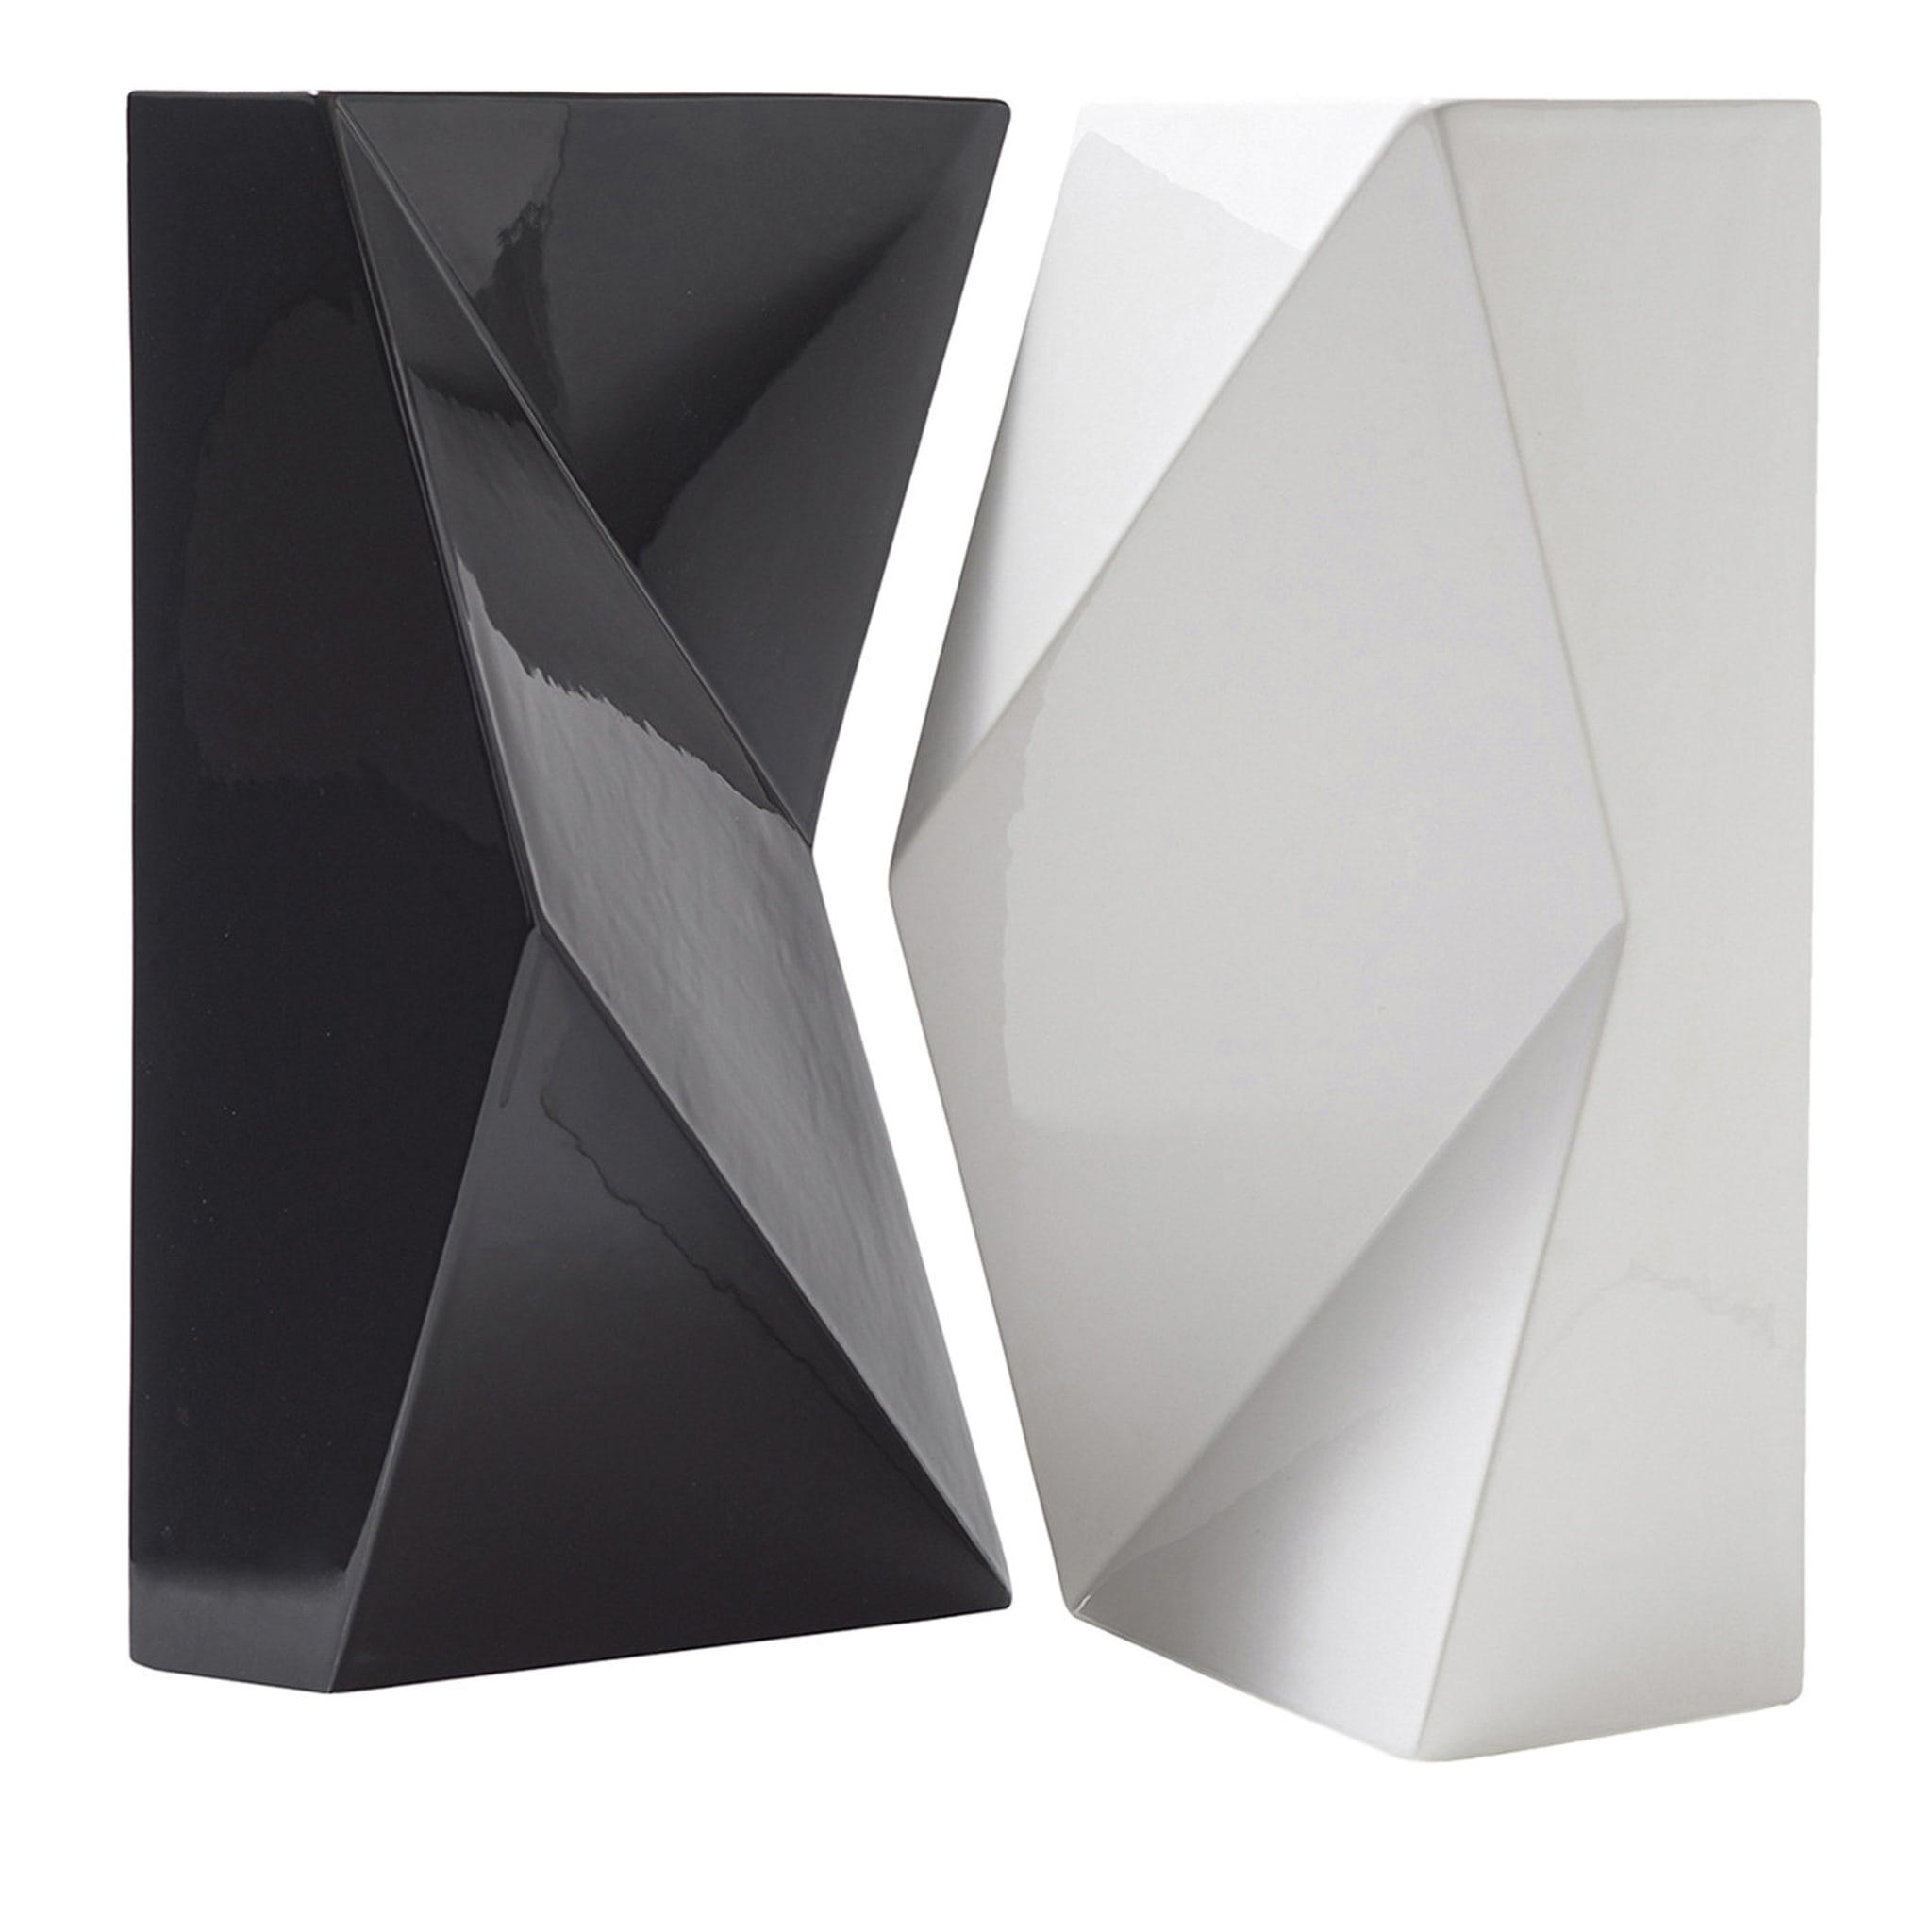 Verso Set of 2 Black and White Vases by Antonio Saporito - Main view